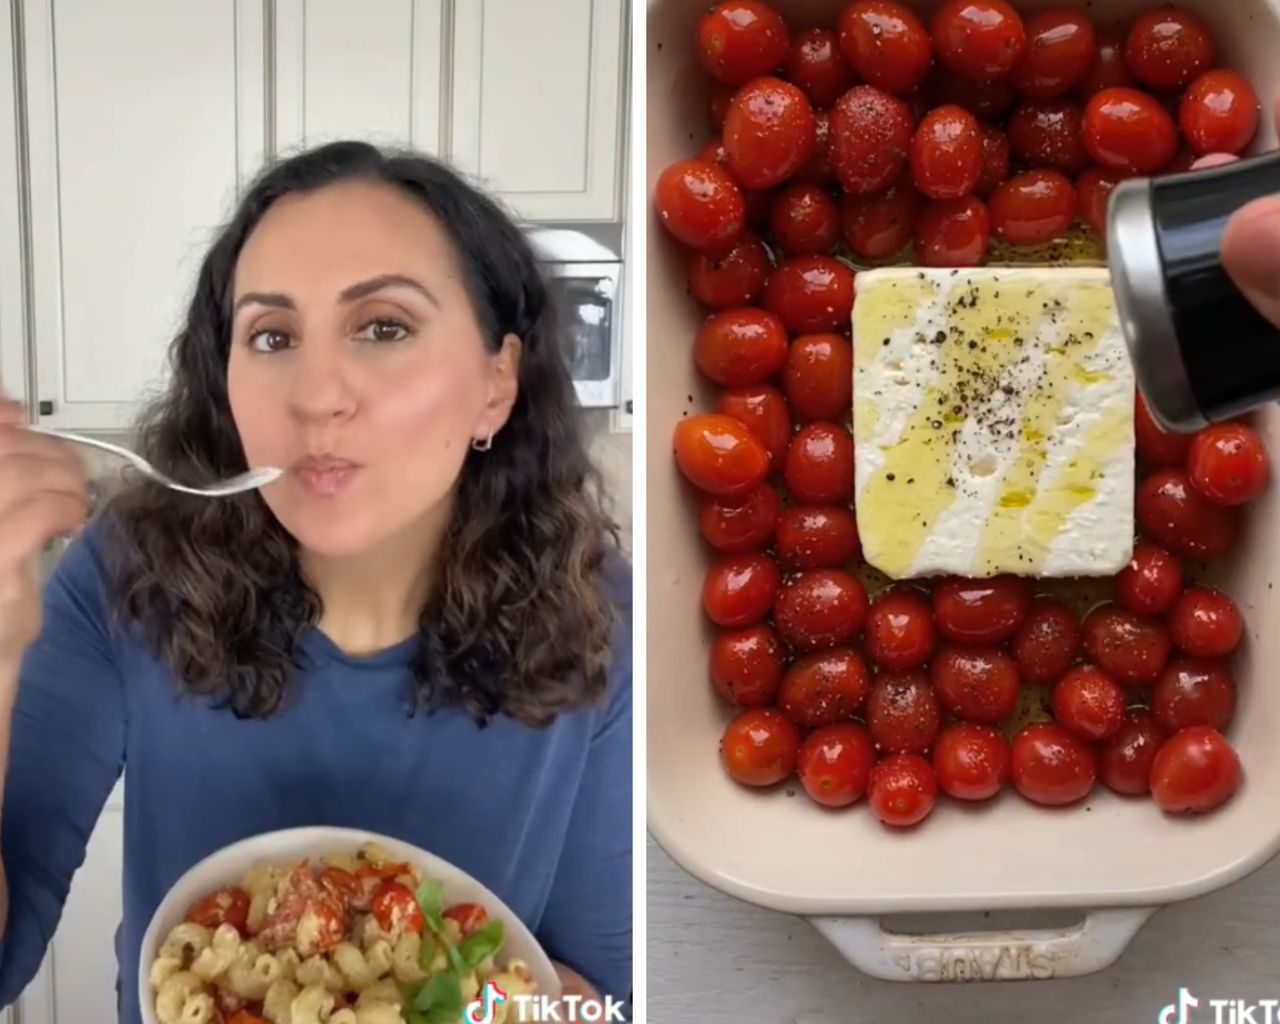 TikTok Viral Food Recipes Like 'Feta Pasta' Available in Virtual